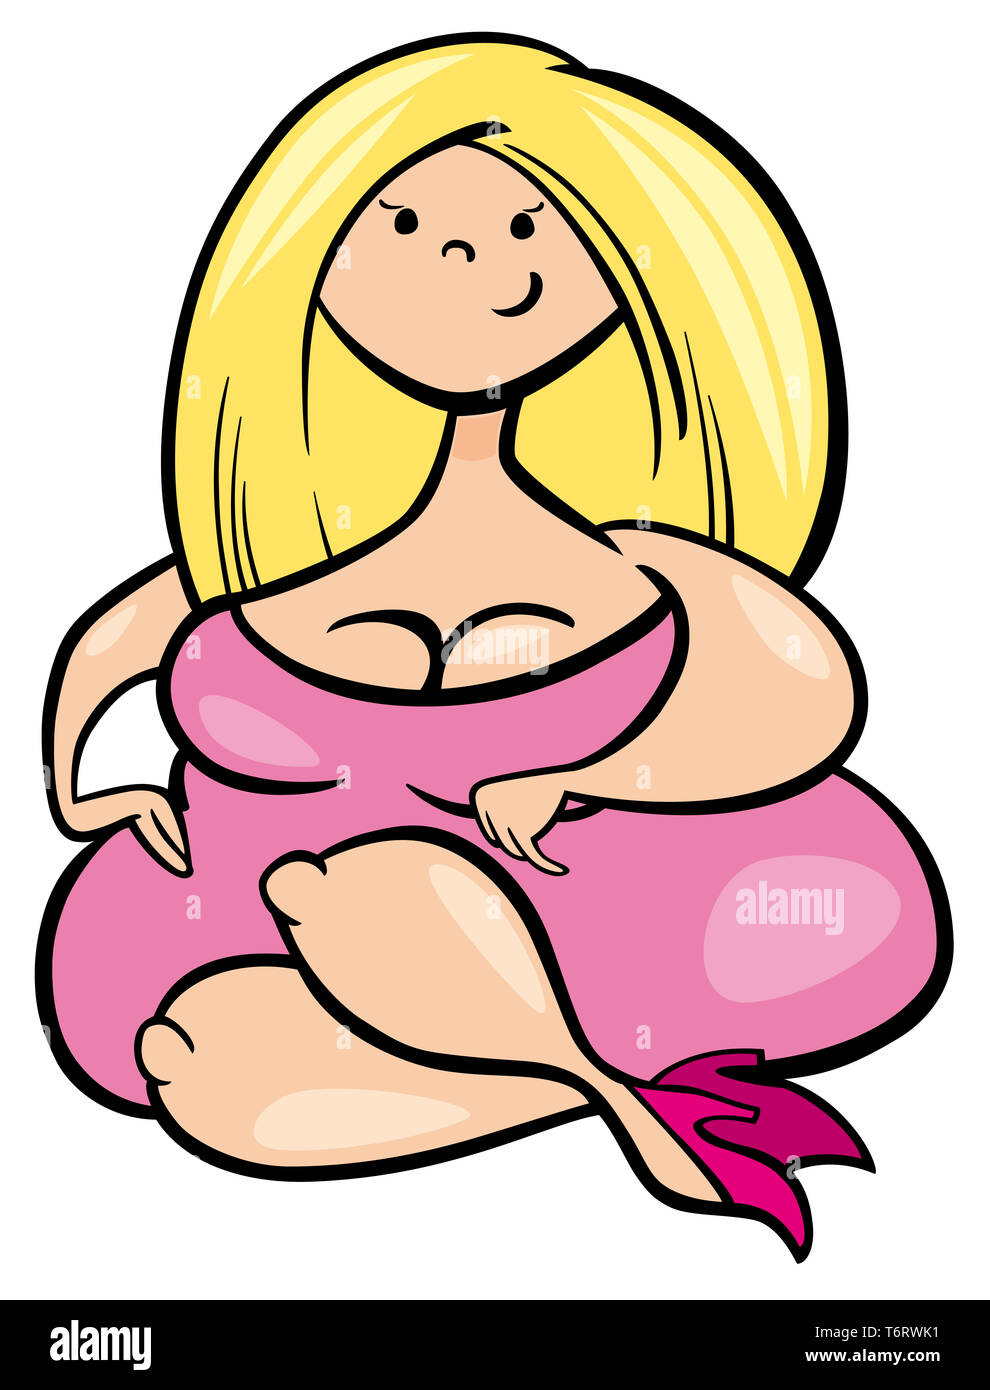 pretty obese girl cartoon character Stock Photo